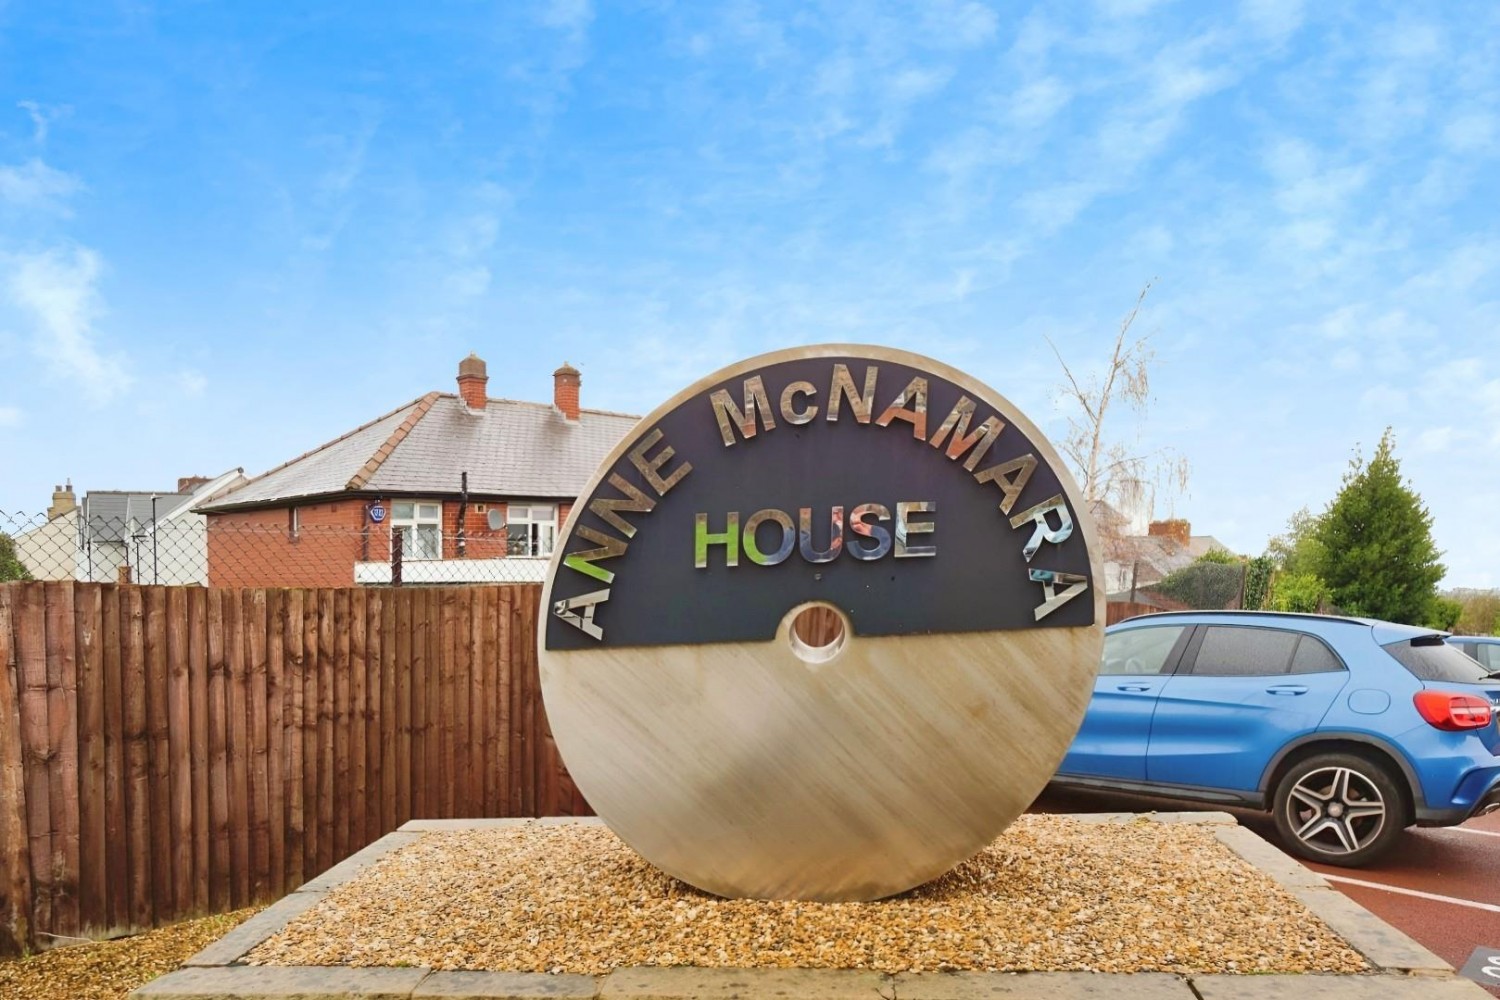 Anne McNamara House , 152 Lydgate Lane, Sheffield, S10 5FP